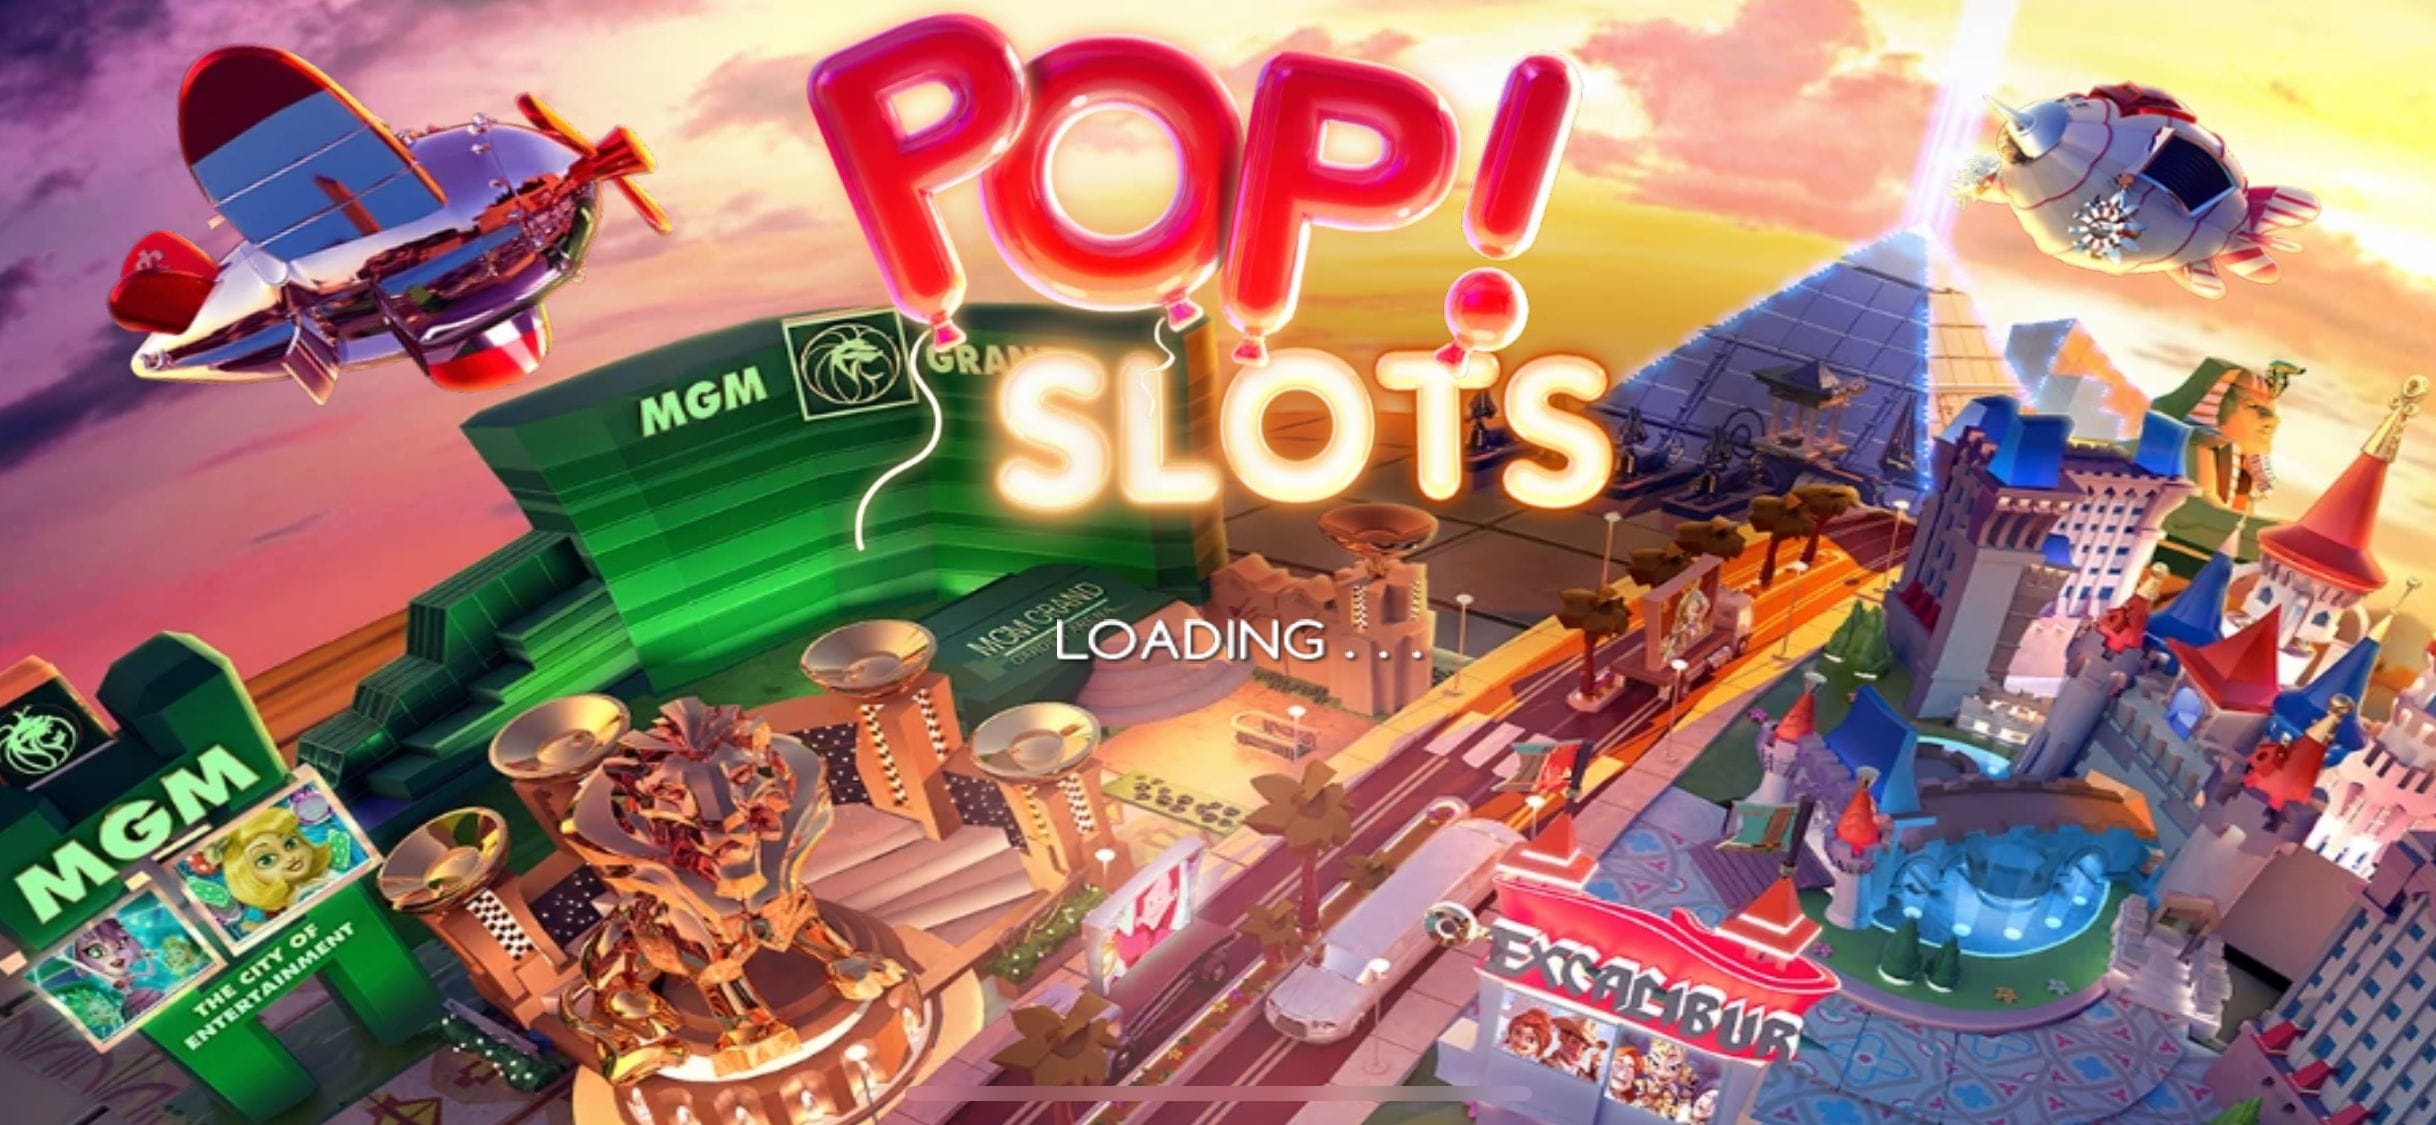 pop slots low chips